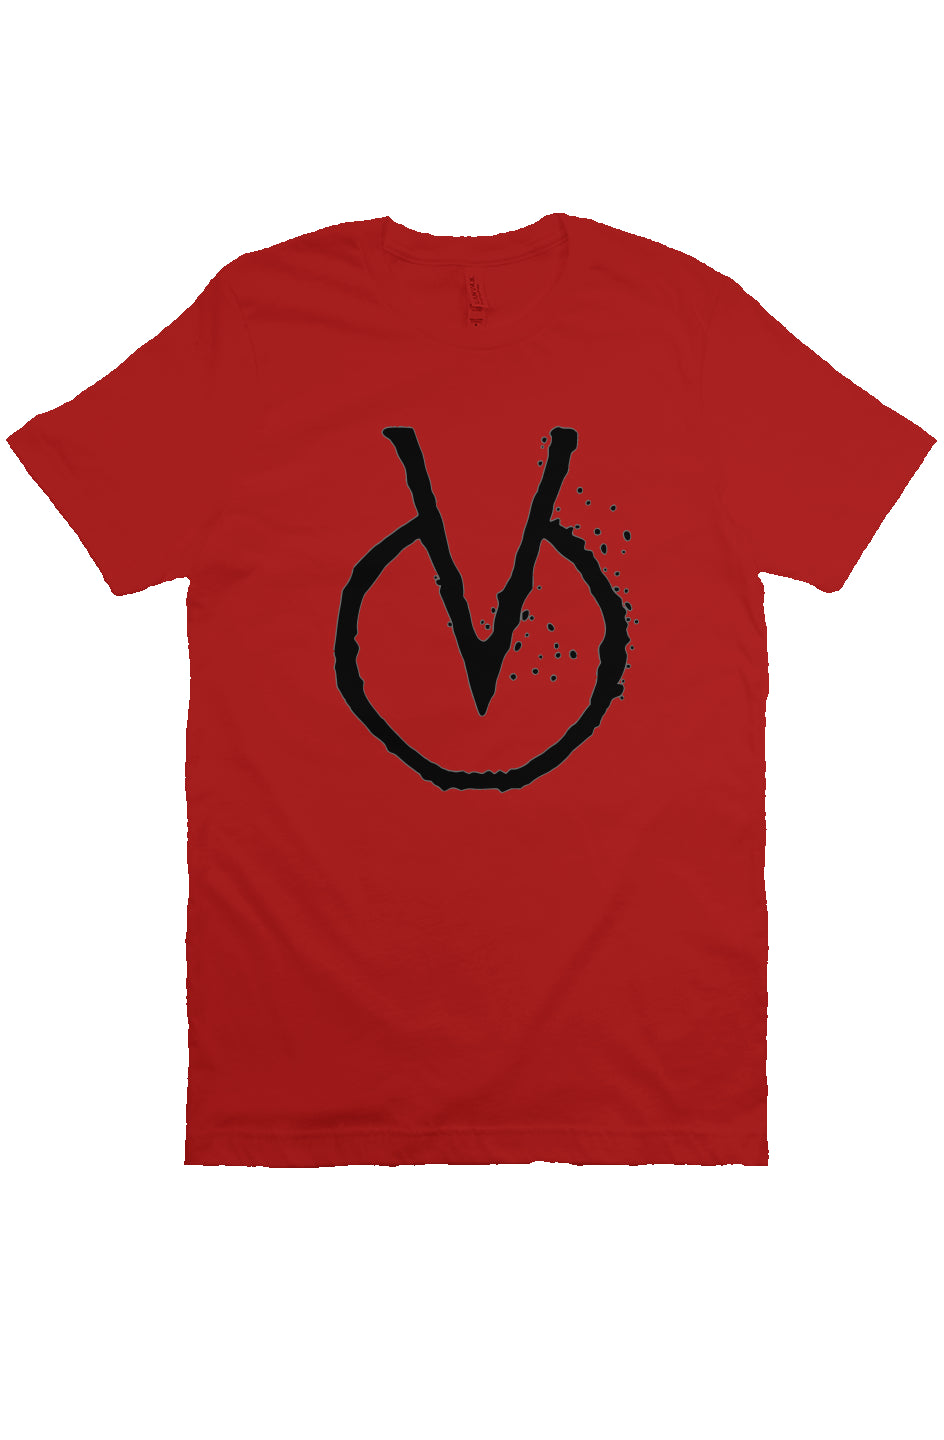 The Velvicks Greatest Hits T-Shirt - Black on Red